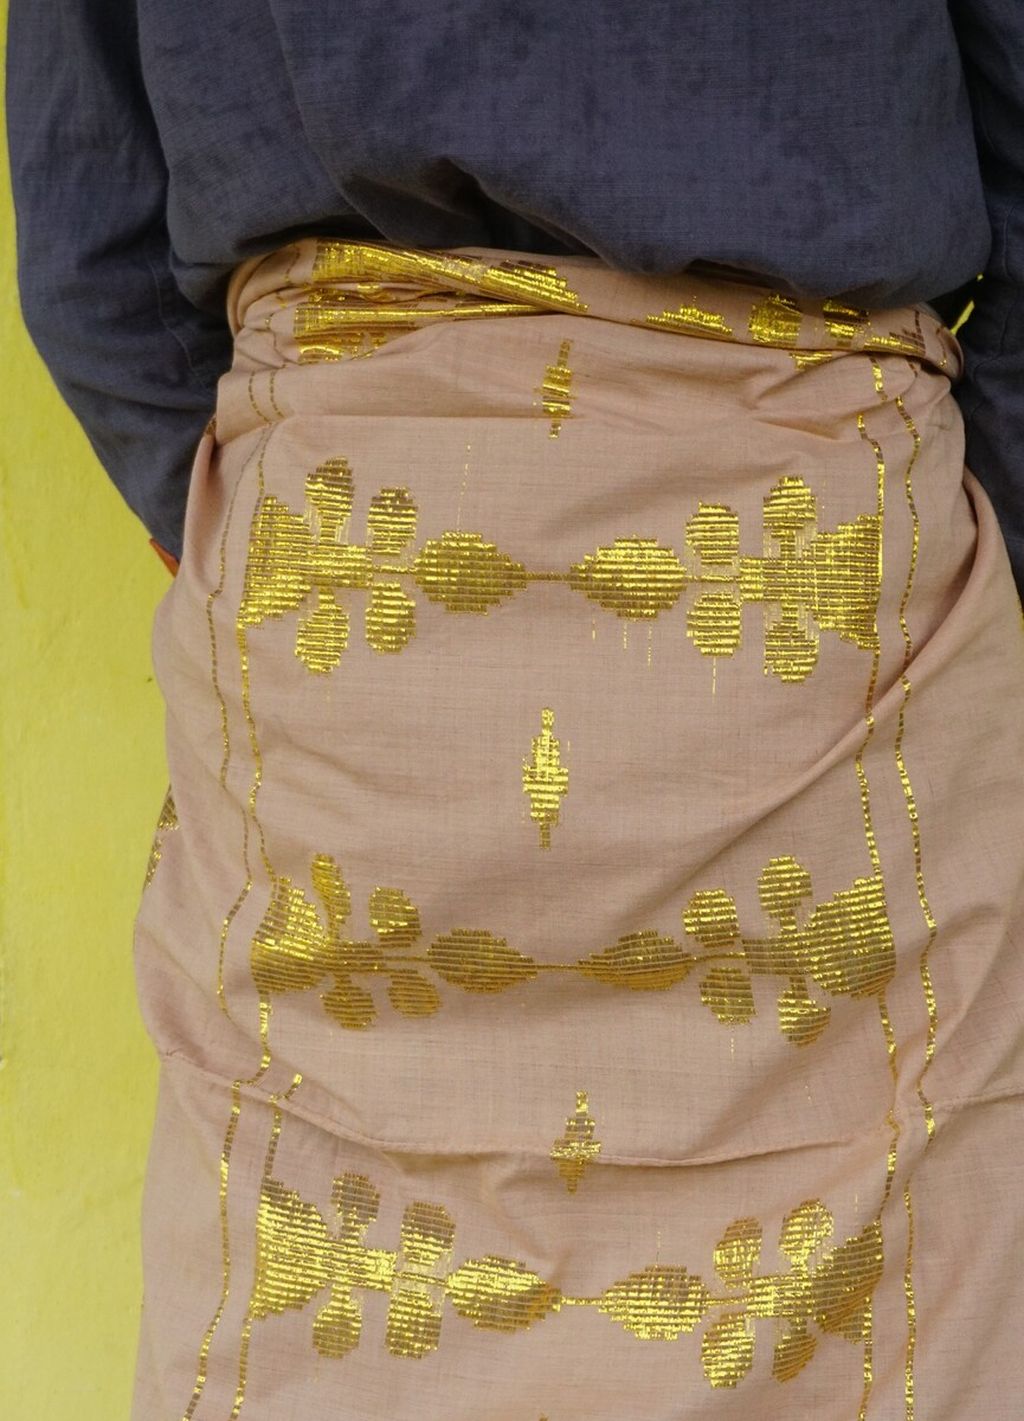 Salah satu contoh tumpal pada sarung Donggala yang dibuat dengan alat tenun gedokan (tradisional). Tumpal harus dipakai di bagian belakang tubuh oleh lelaki dan perempuan yang ikut dalam acara adat suku Kaili di Sulteng.